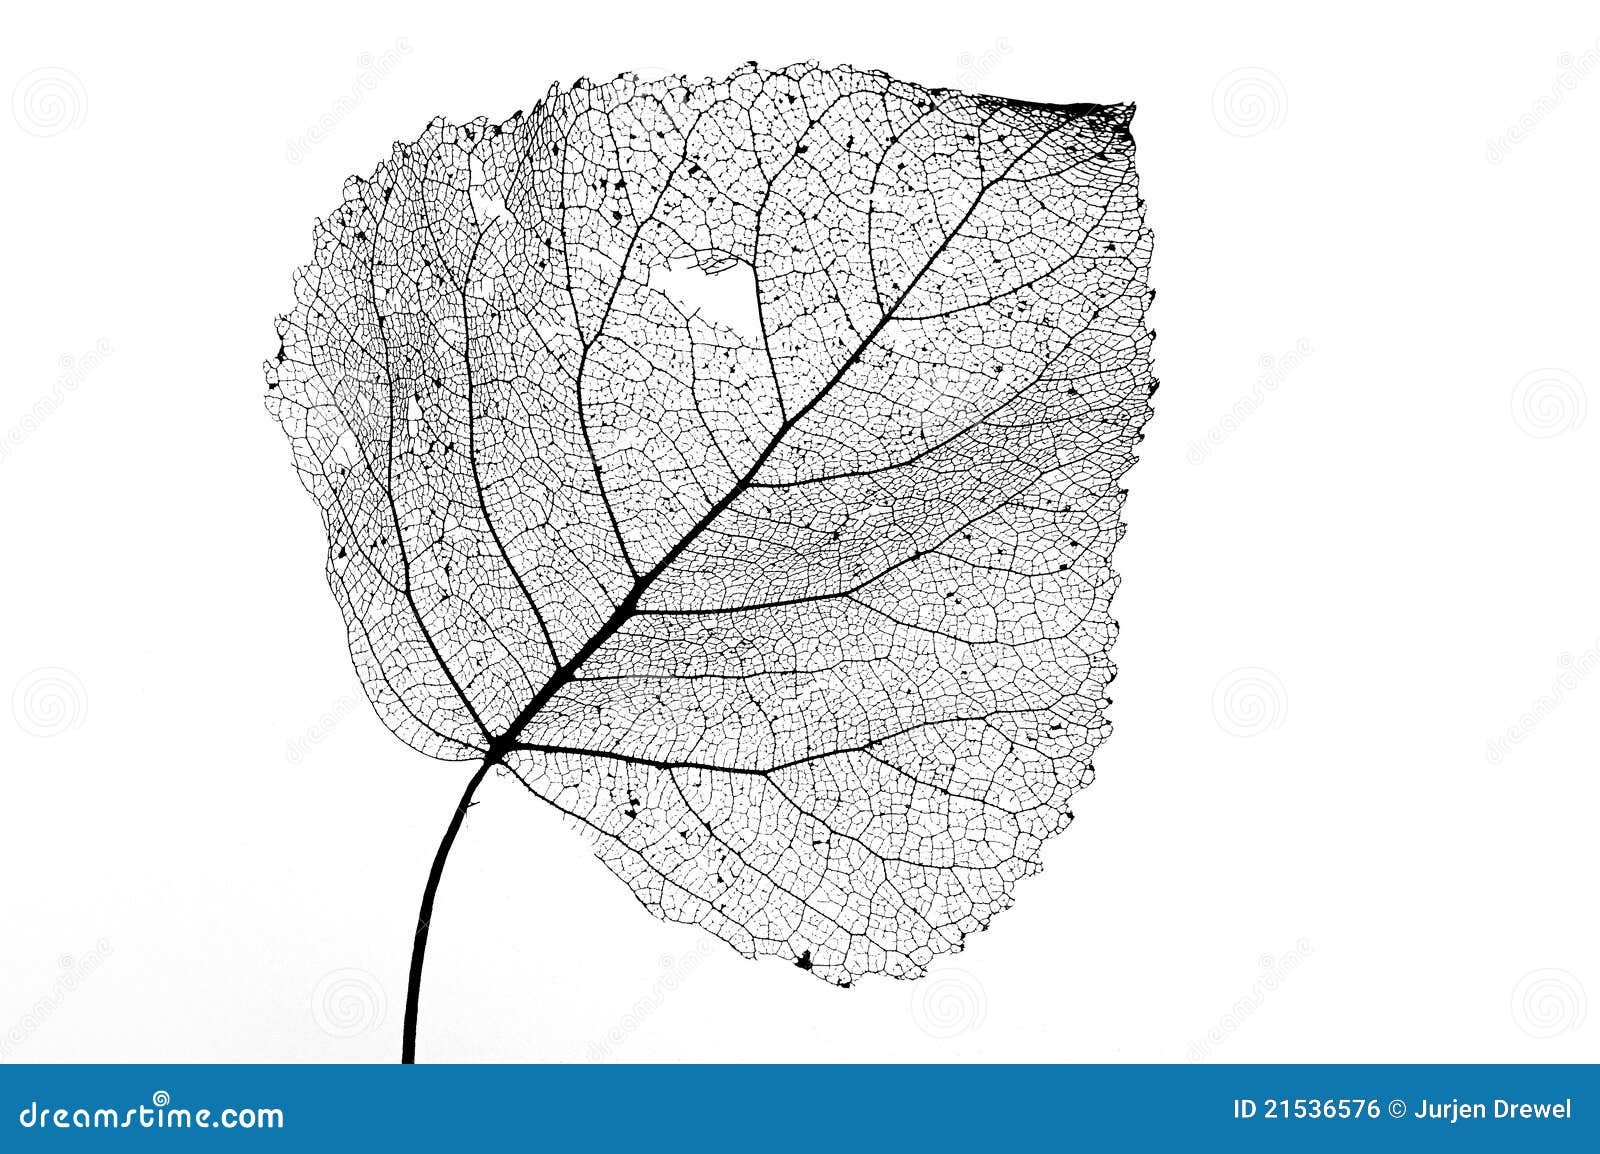 leaf skeleton black & white